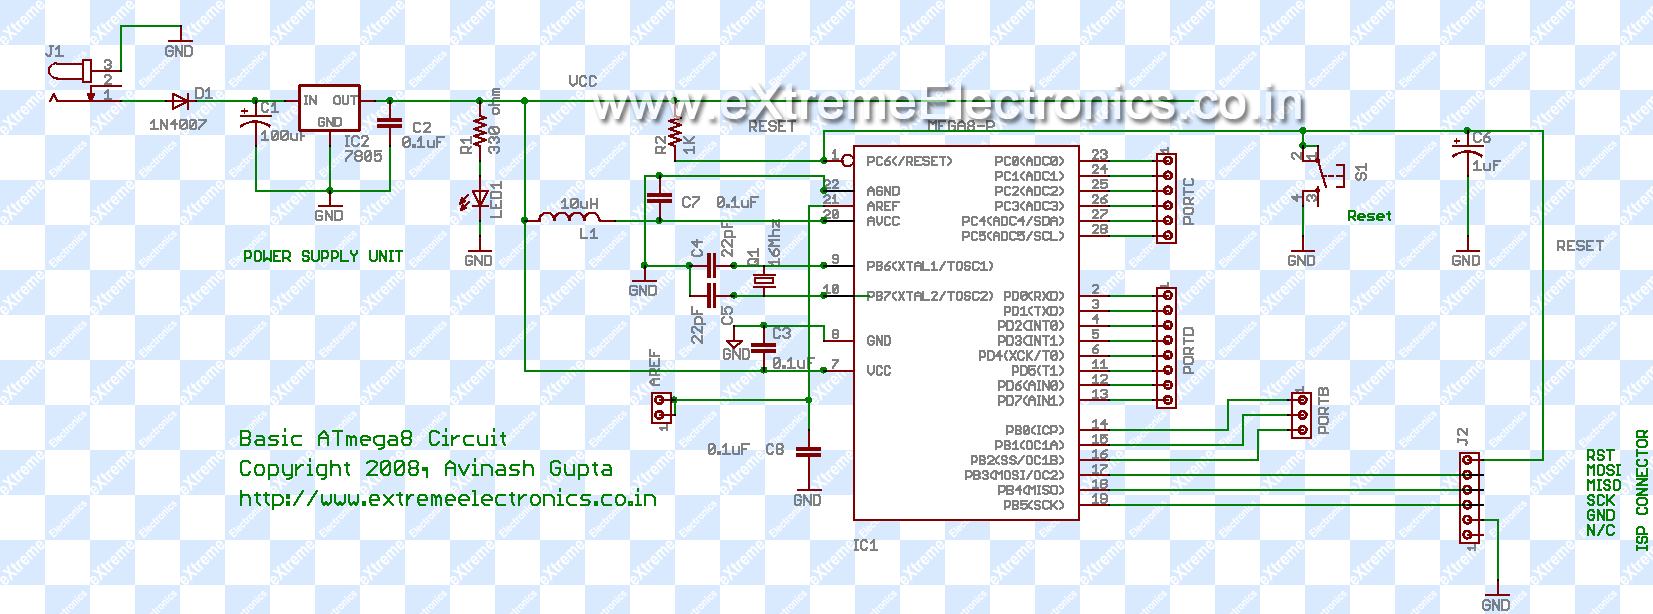 atmega8 basic schematic circuit